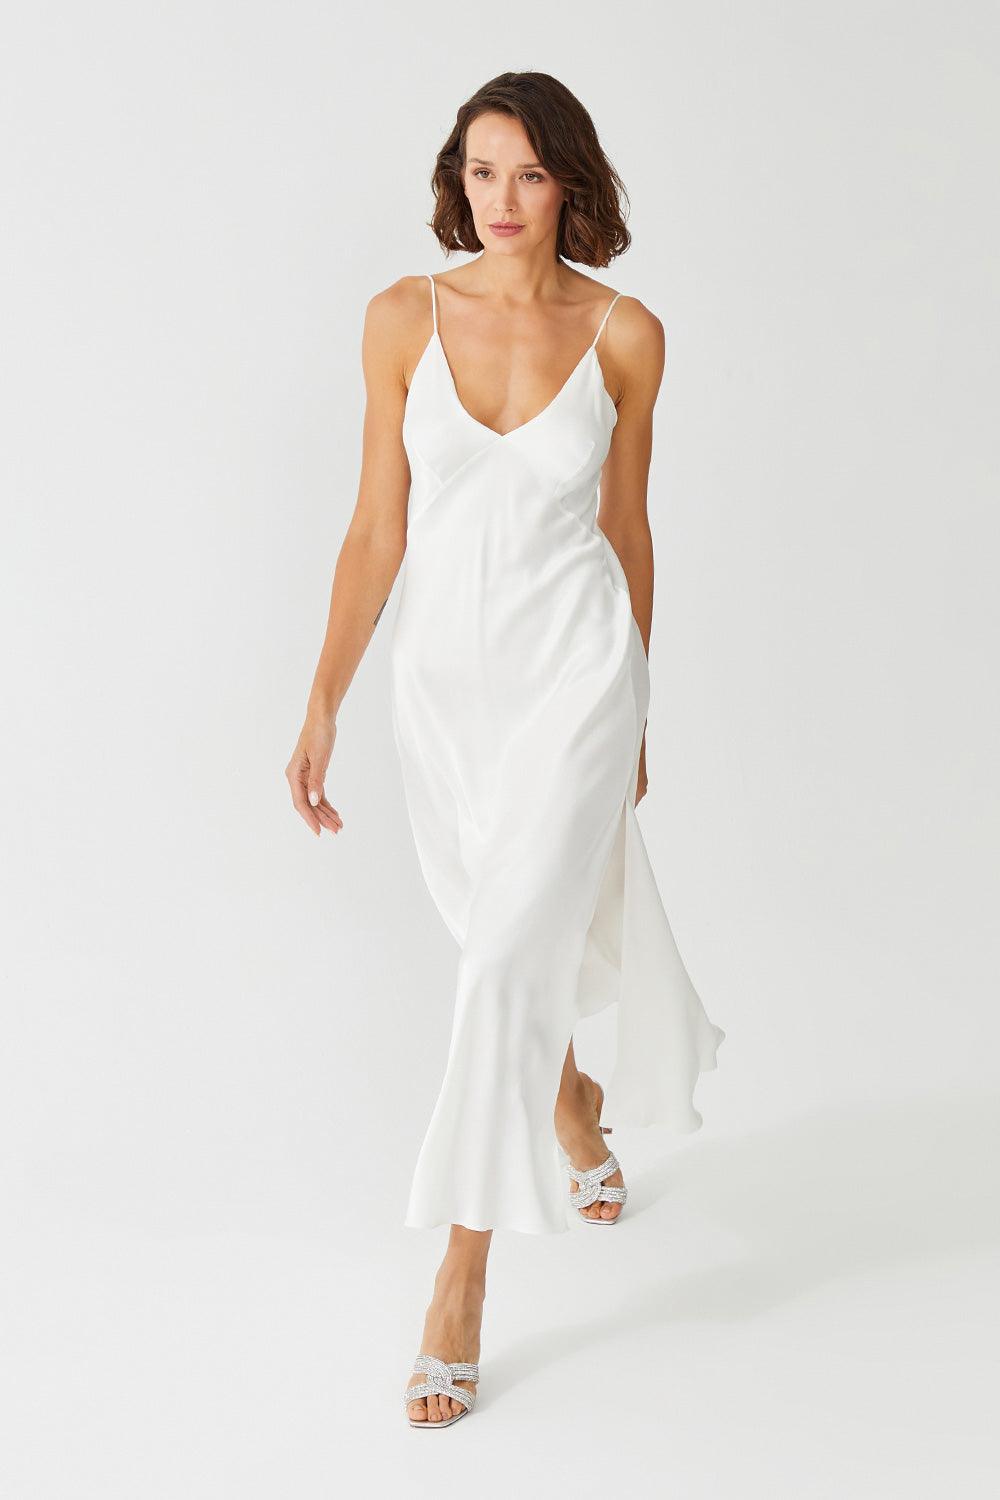 Alyssa Long Rayon Trimmed Slip Dress - Off White - Bocan